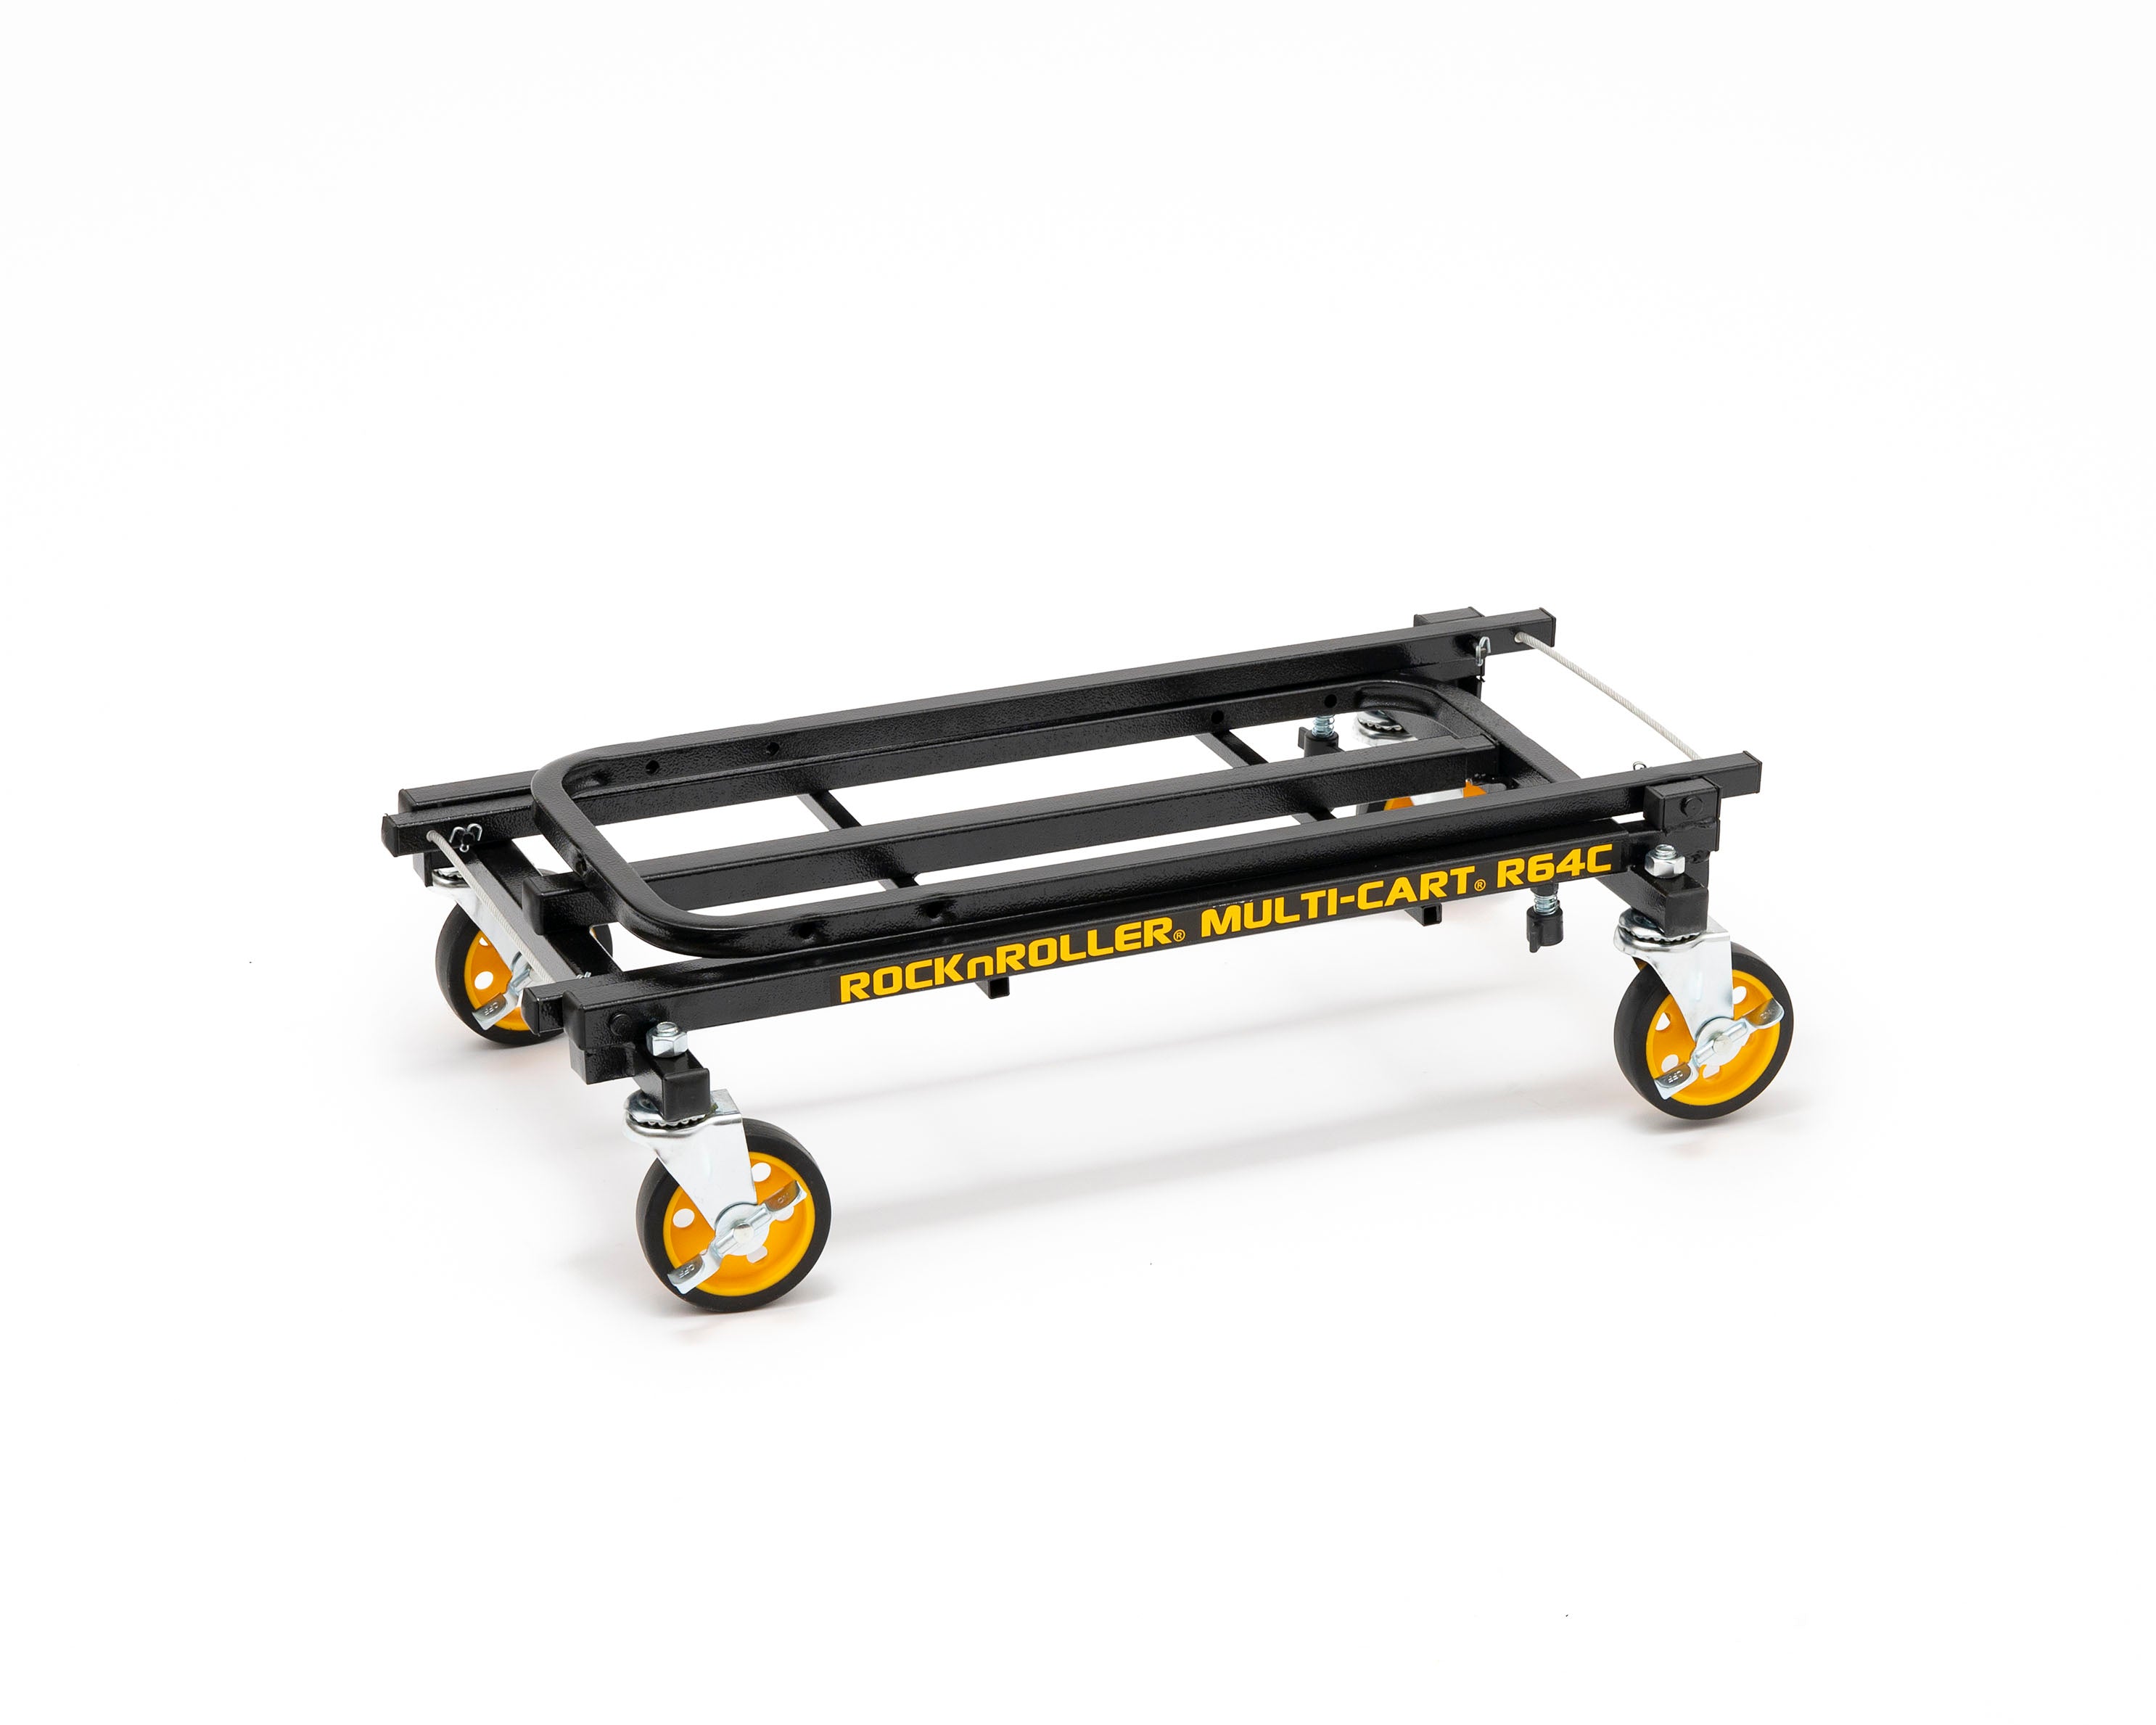 RockNRoller® Multi-Cart® R64C “Mini” 4 Caster Swivel Cart